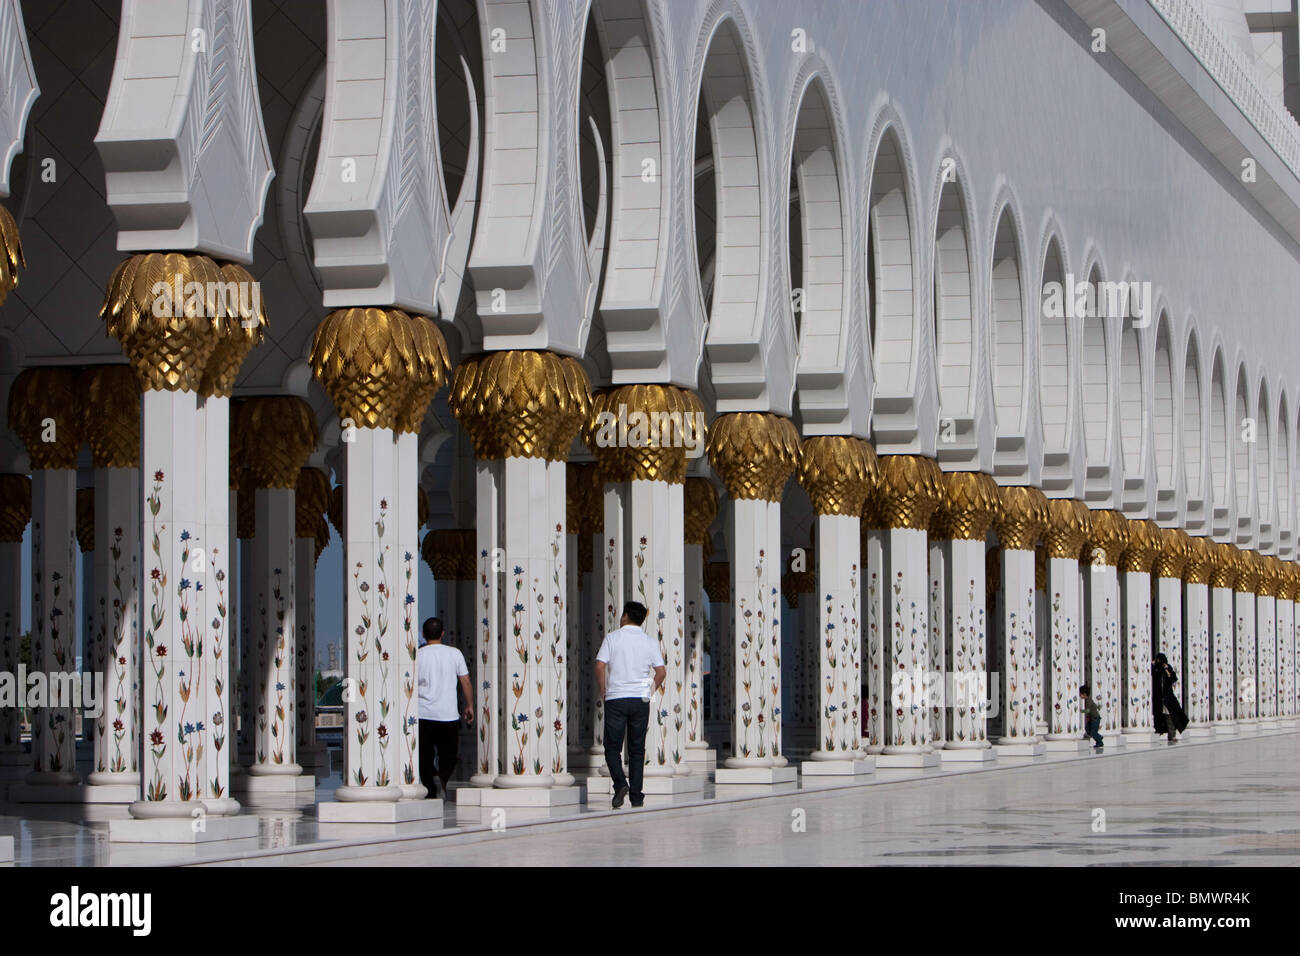 Pillars inside the new Sheikh Zayed Bin Sultan Al Nahyan Mosque (Grand Mosque), Abu Dhabi, United Arab Emirates. Stock Photo